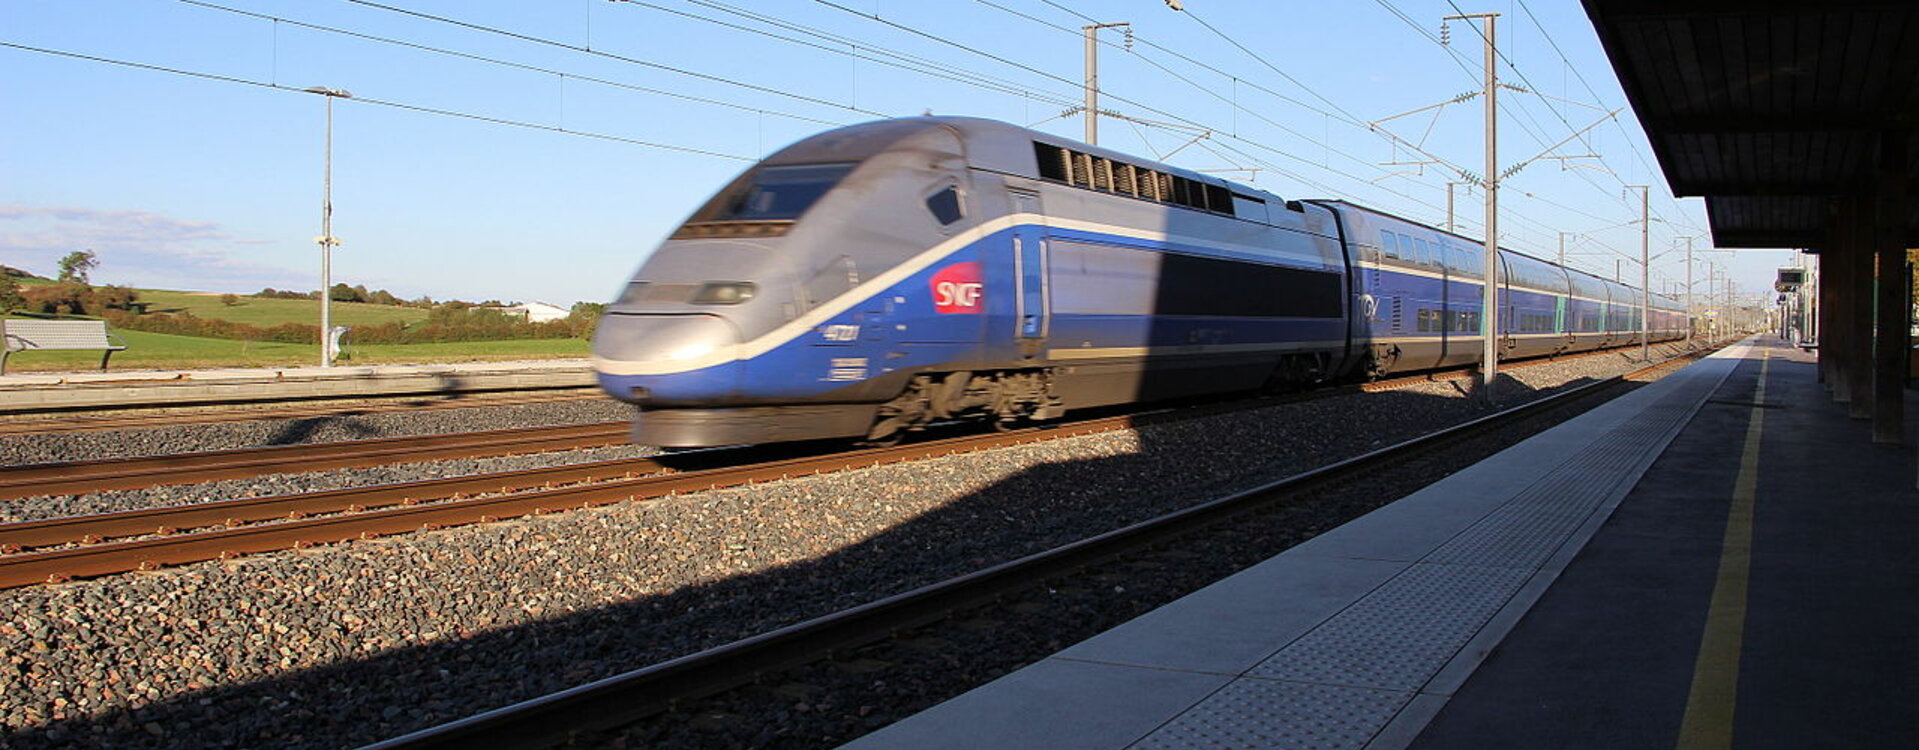 Gare Meuse-TGV Voie-Sacrée